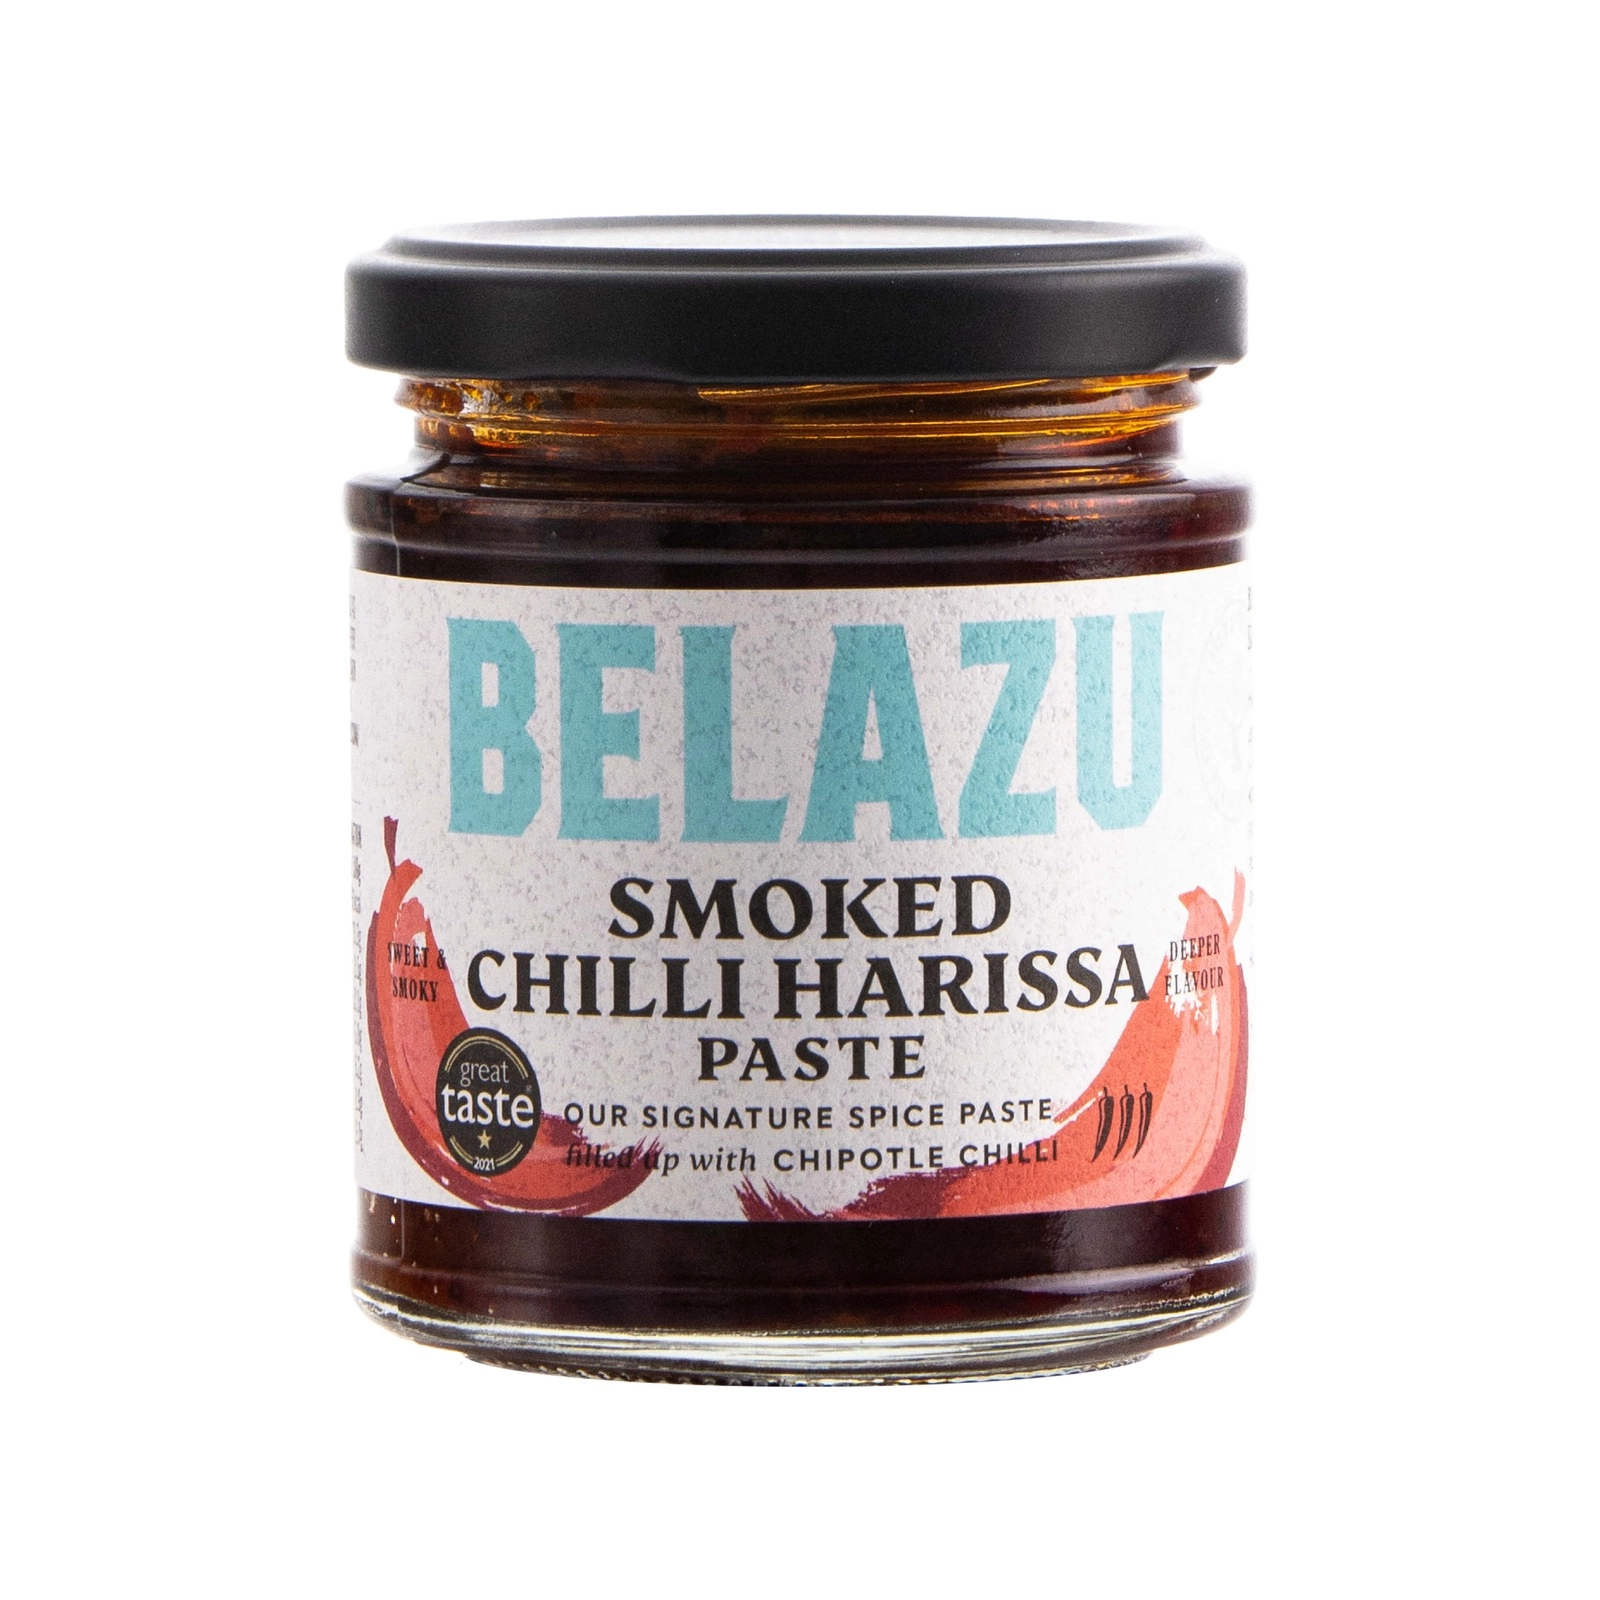 BELAZU Smoked Chilli Harissa (130g)